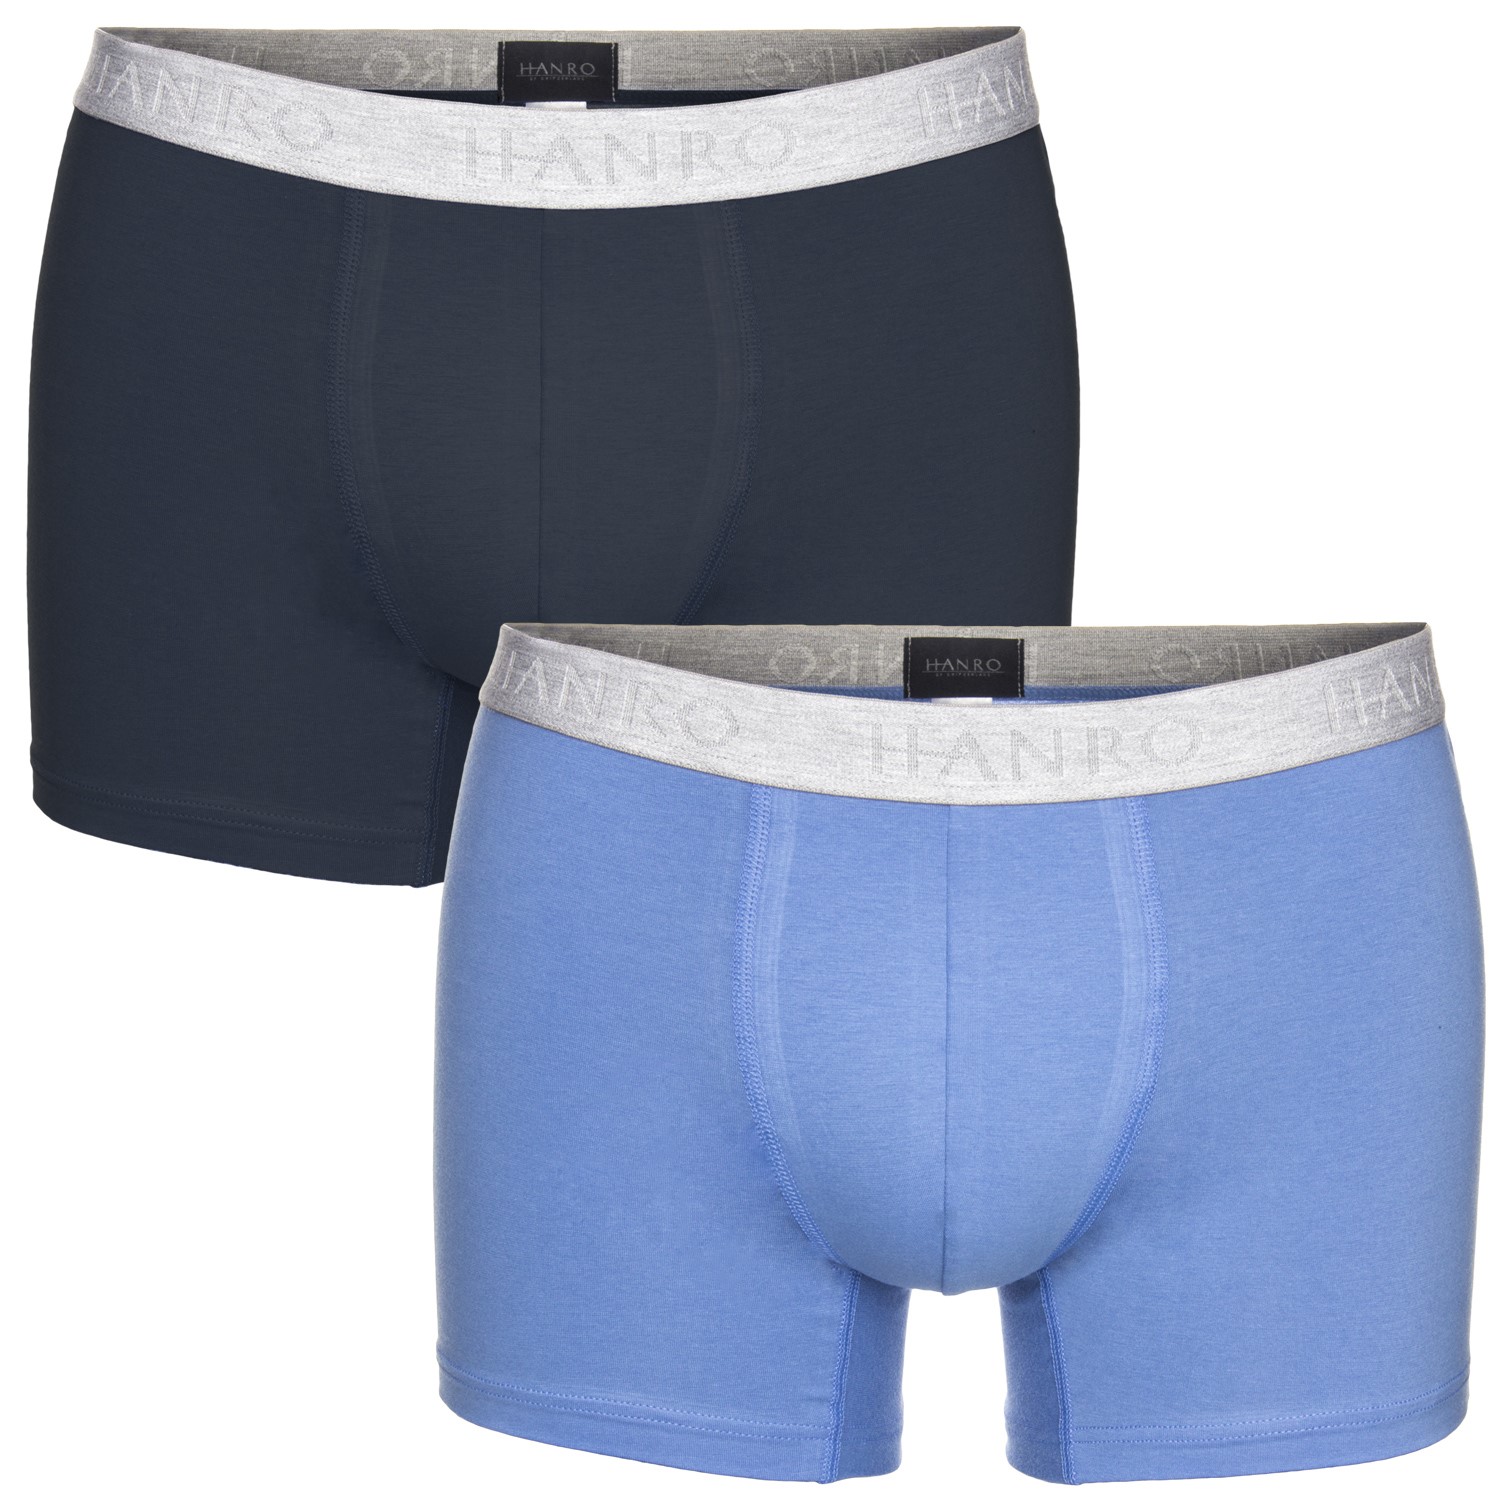 Hanro Cotton Essentials Pants